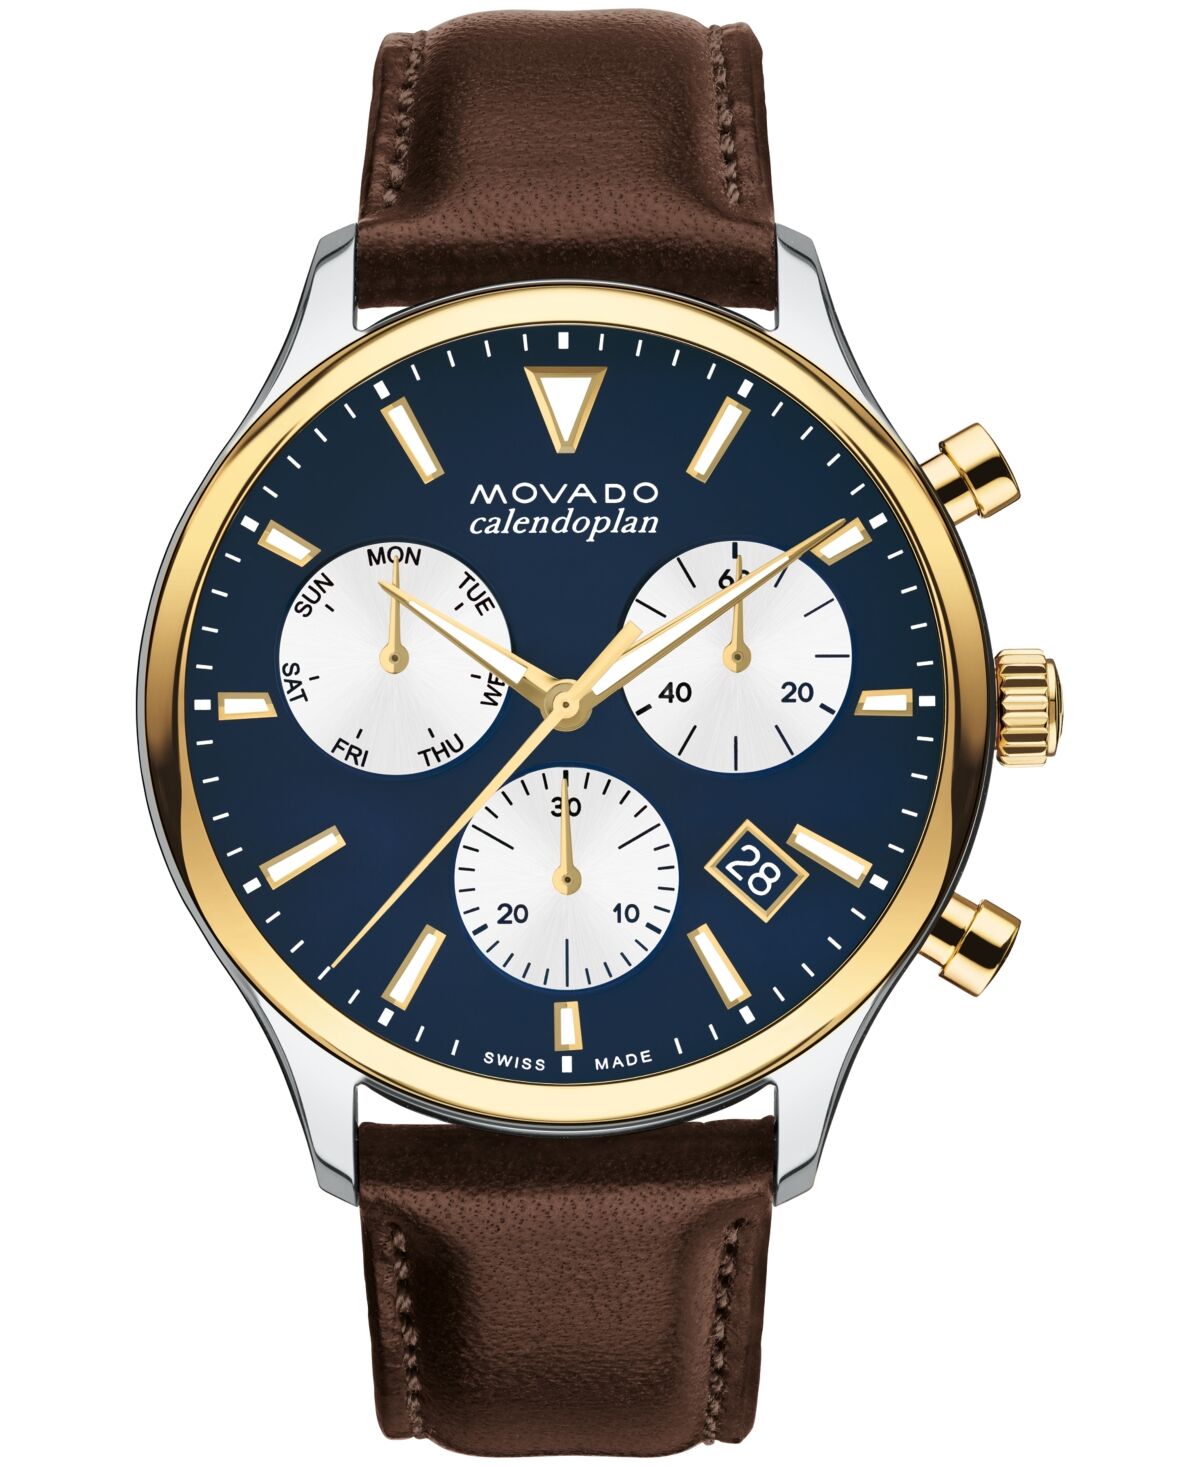 Movado Men's Heritage Calendoplan Swiss Quartz Chronograph Chocolate Genuine Leather Strap Watch 43mm - Brown